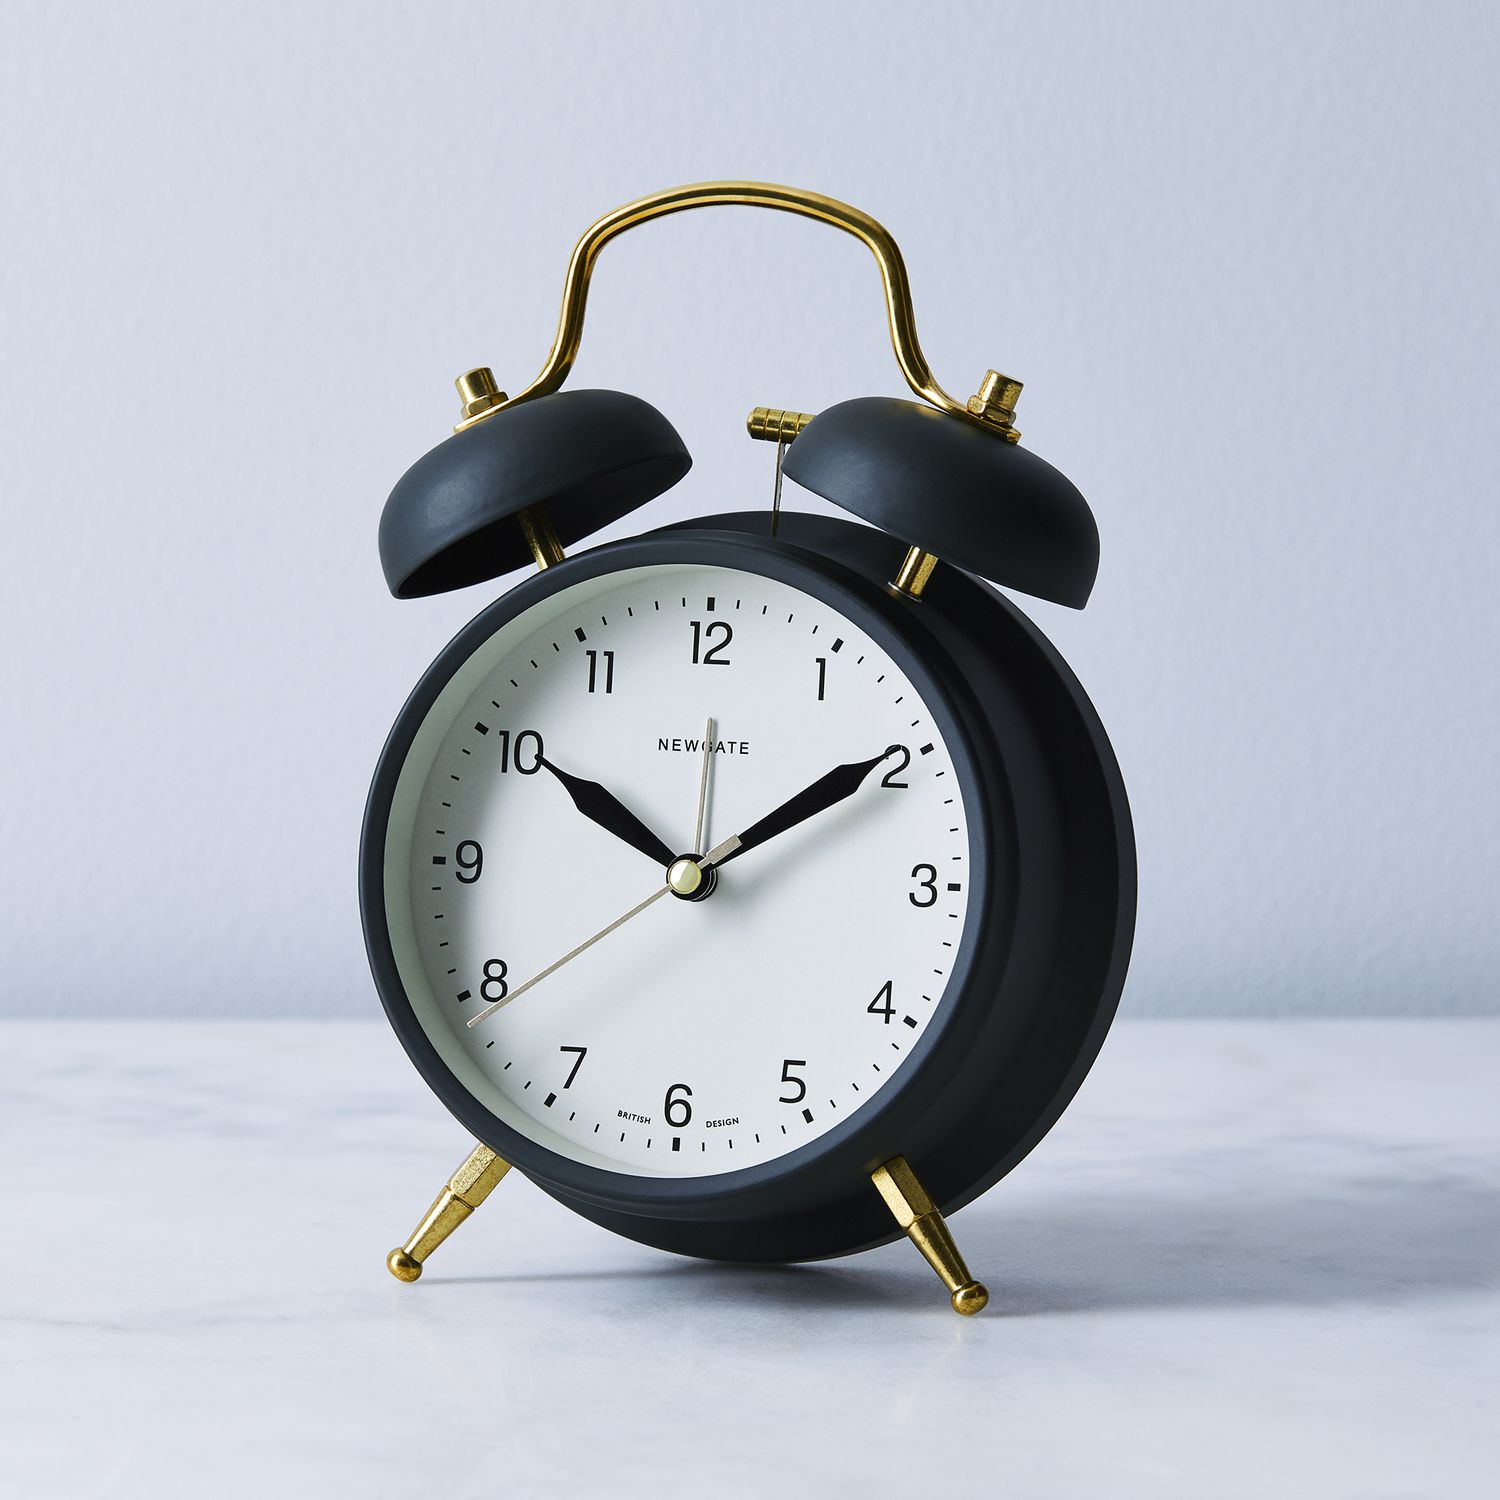 Brass Knocker Alarm Clock on Food52